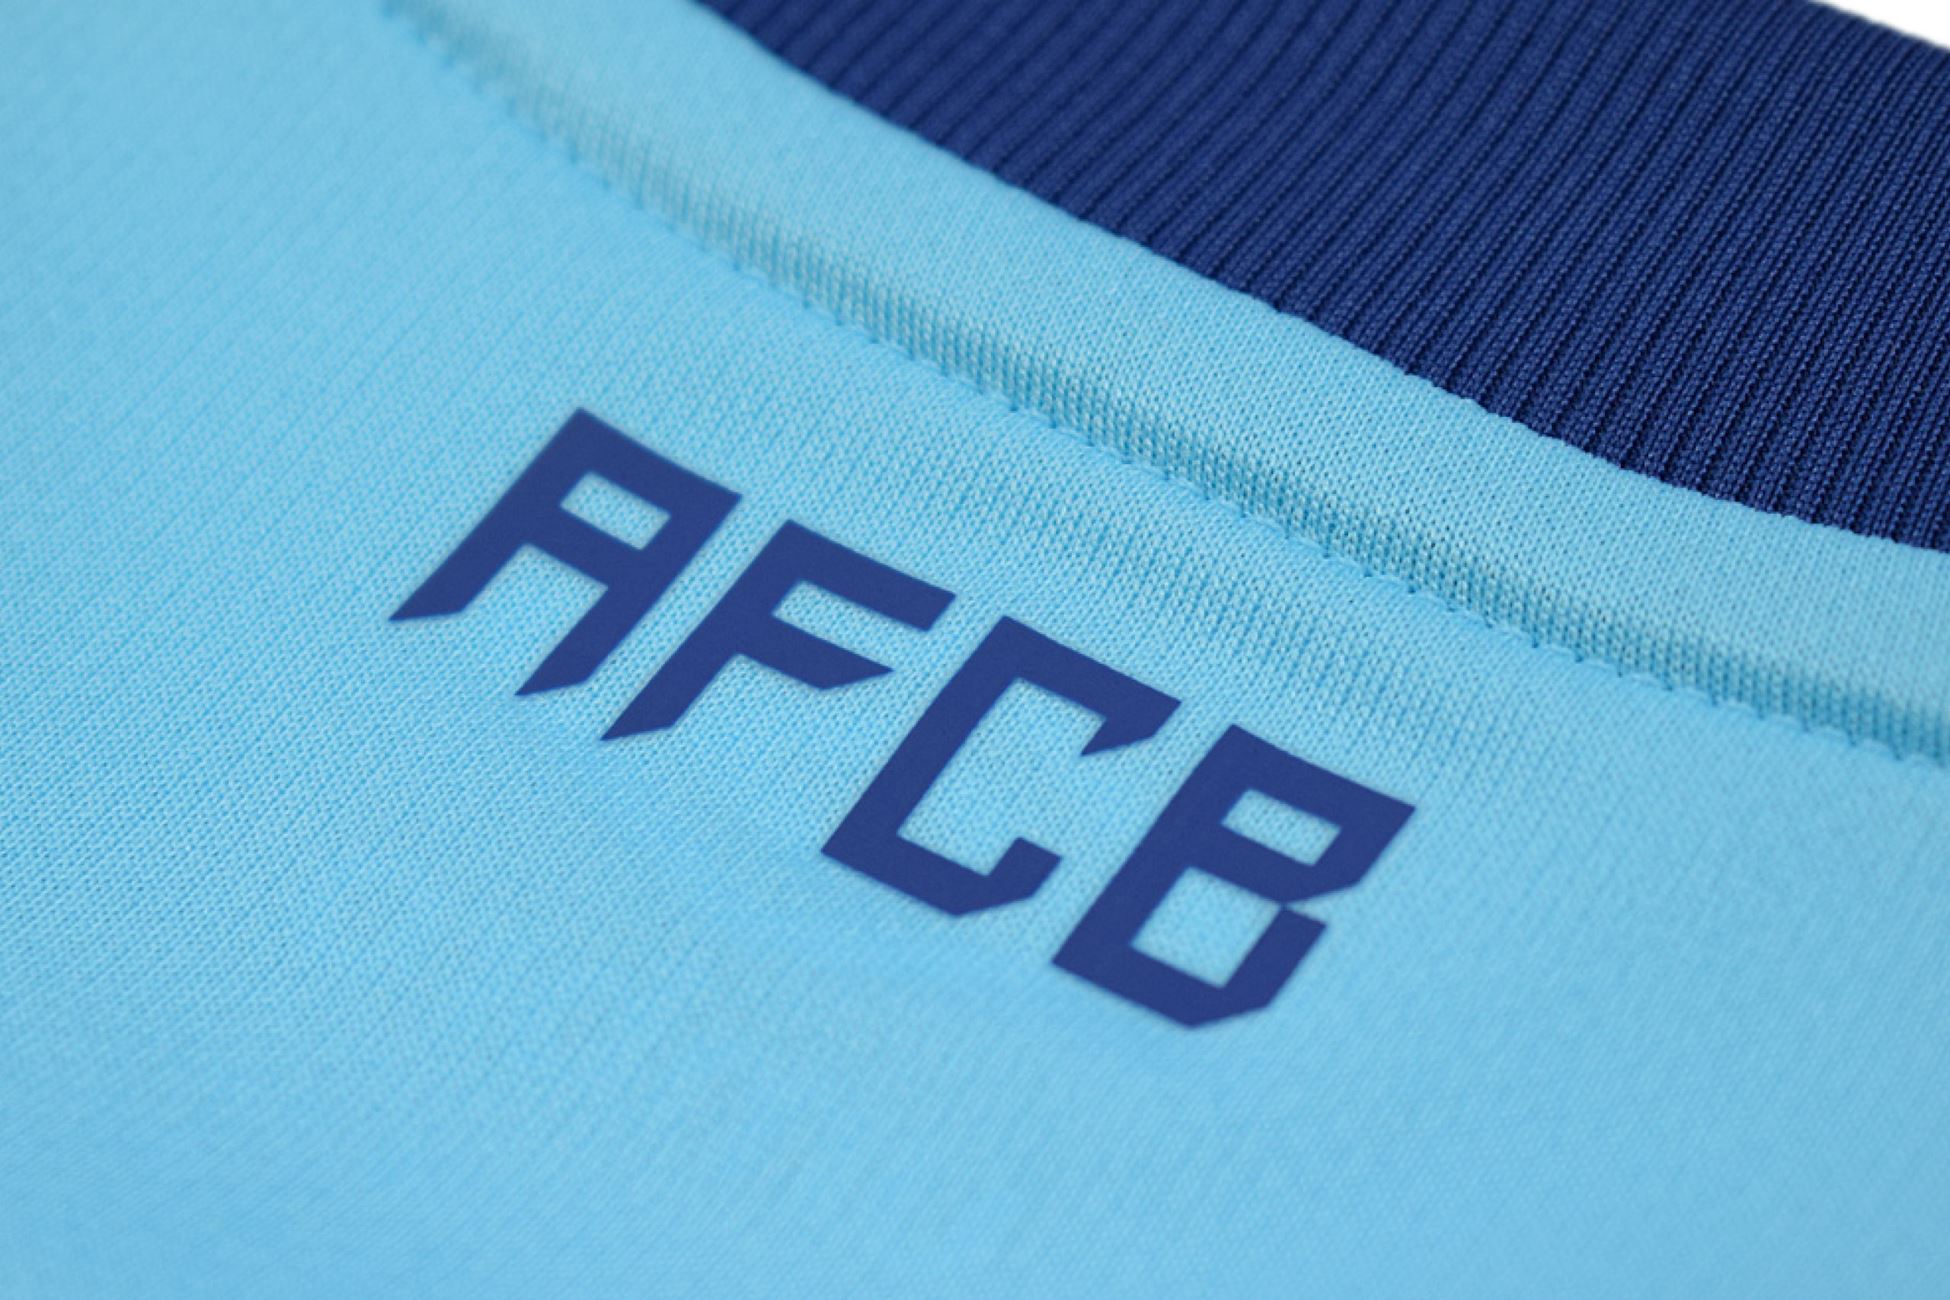 AFCB - Official Club Website